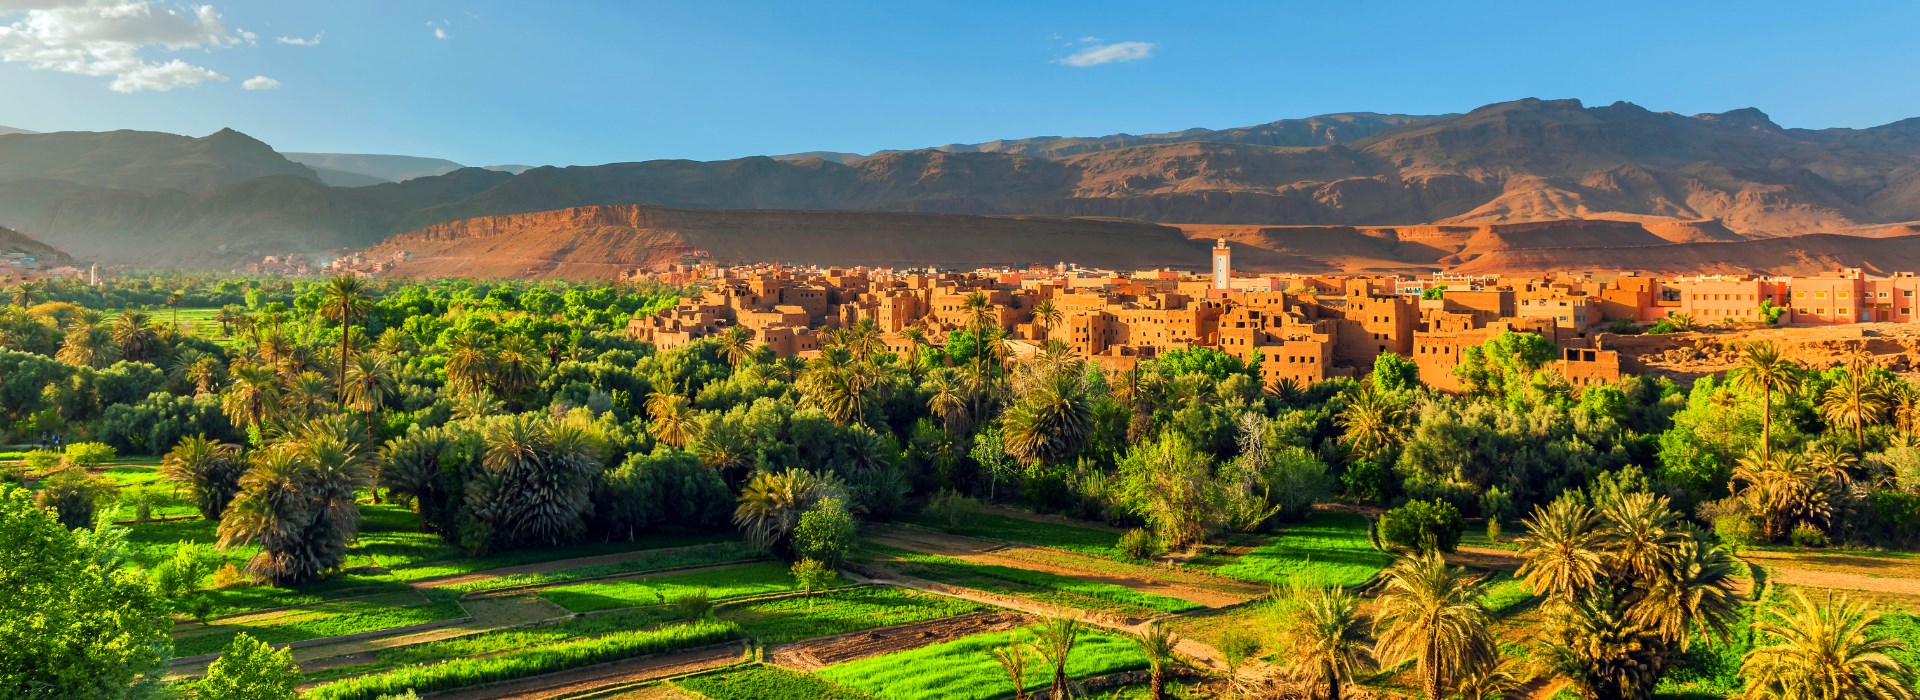 Visiter La vallée du Dades - Maroc